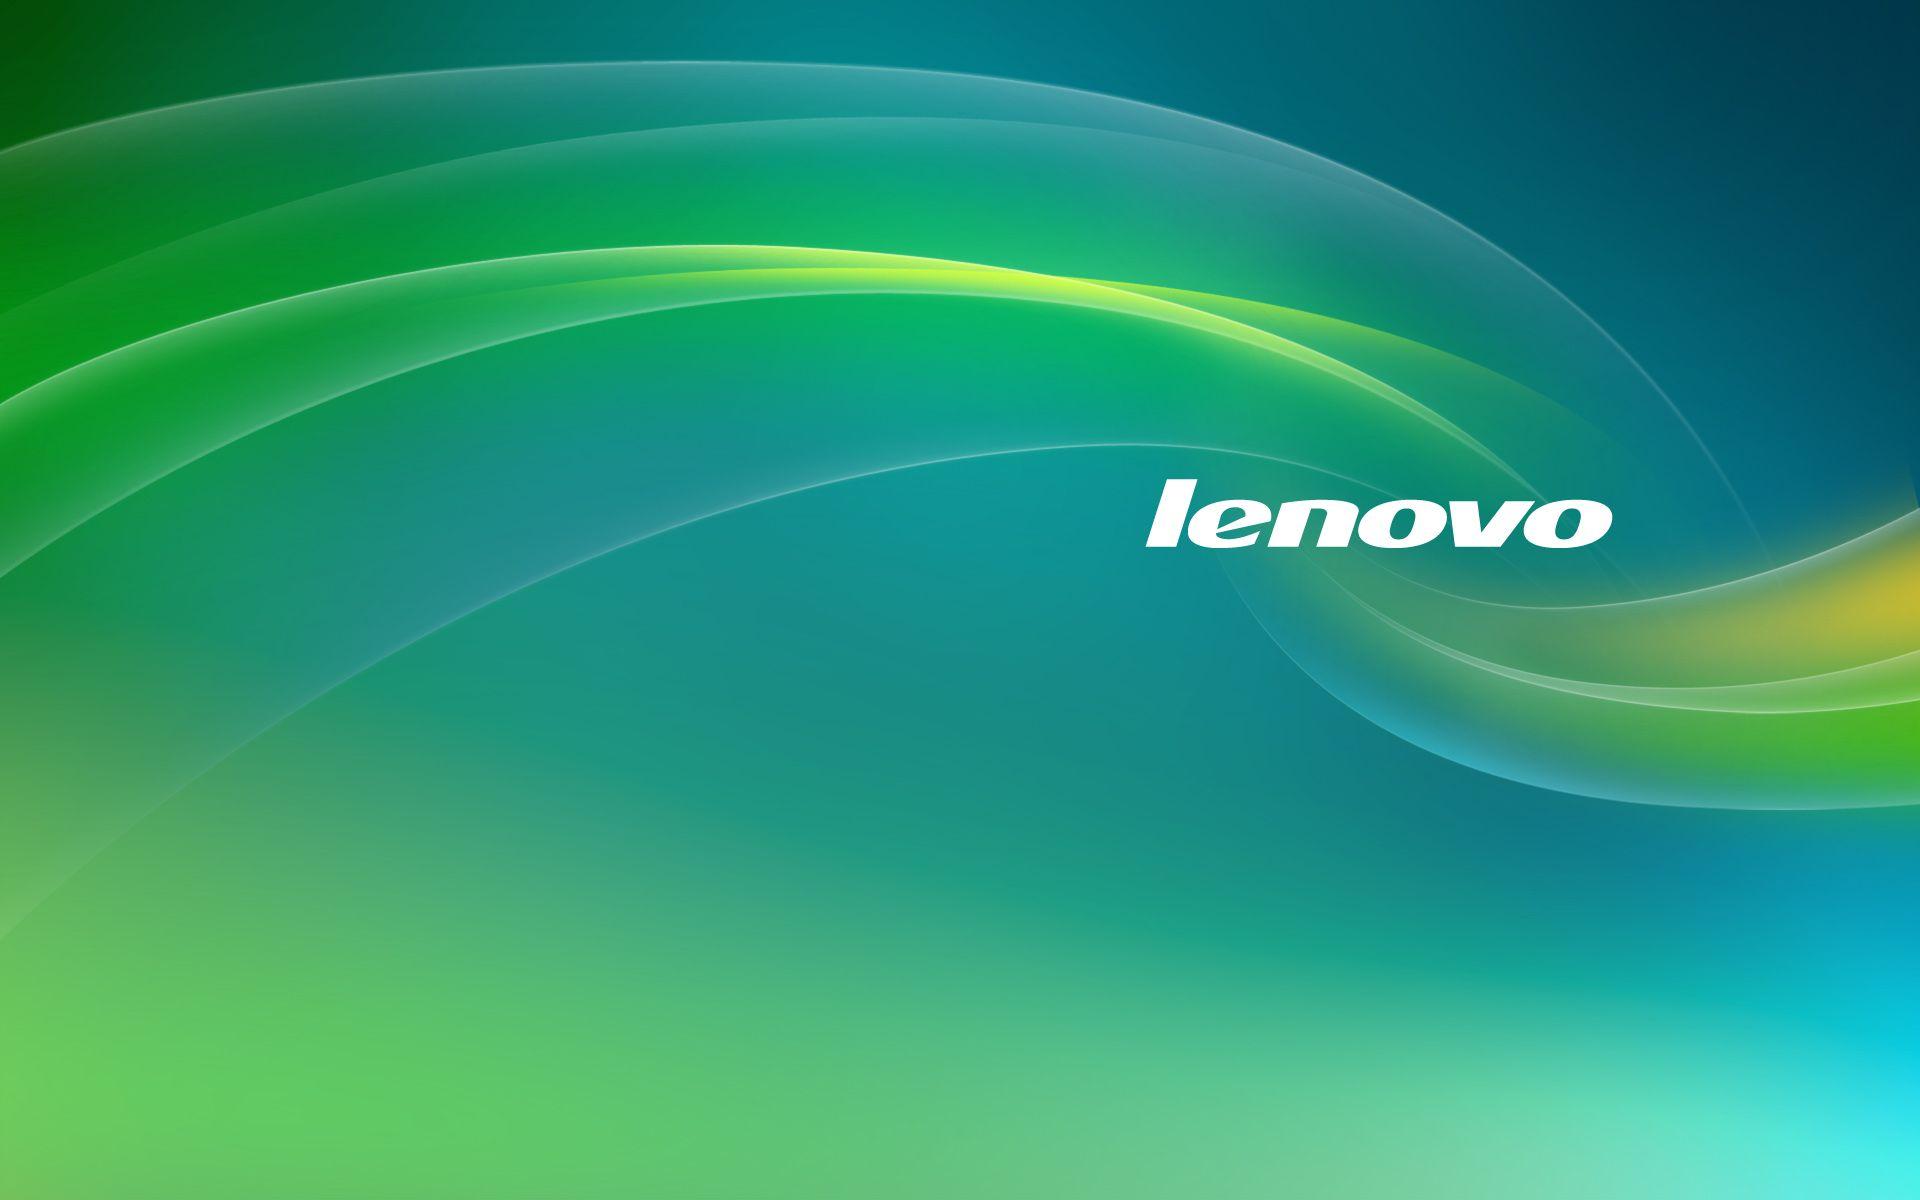 Lenovo Deskto HD Wallpaper, Background Image